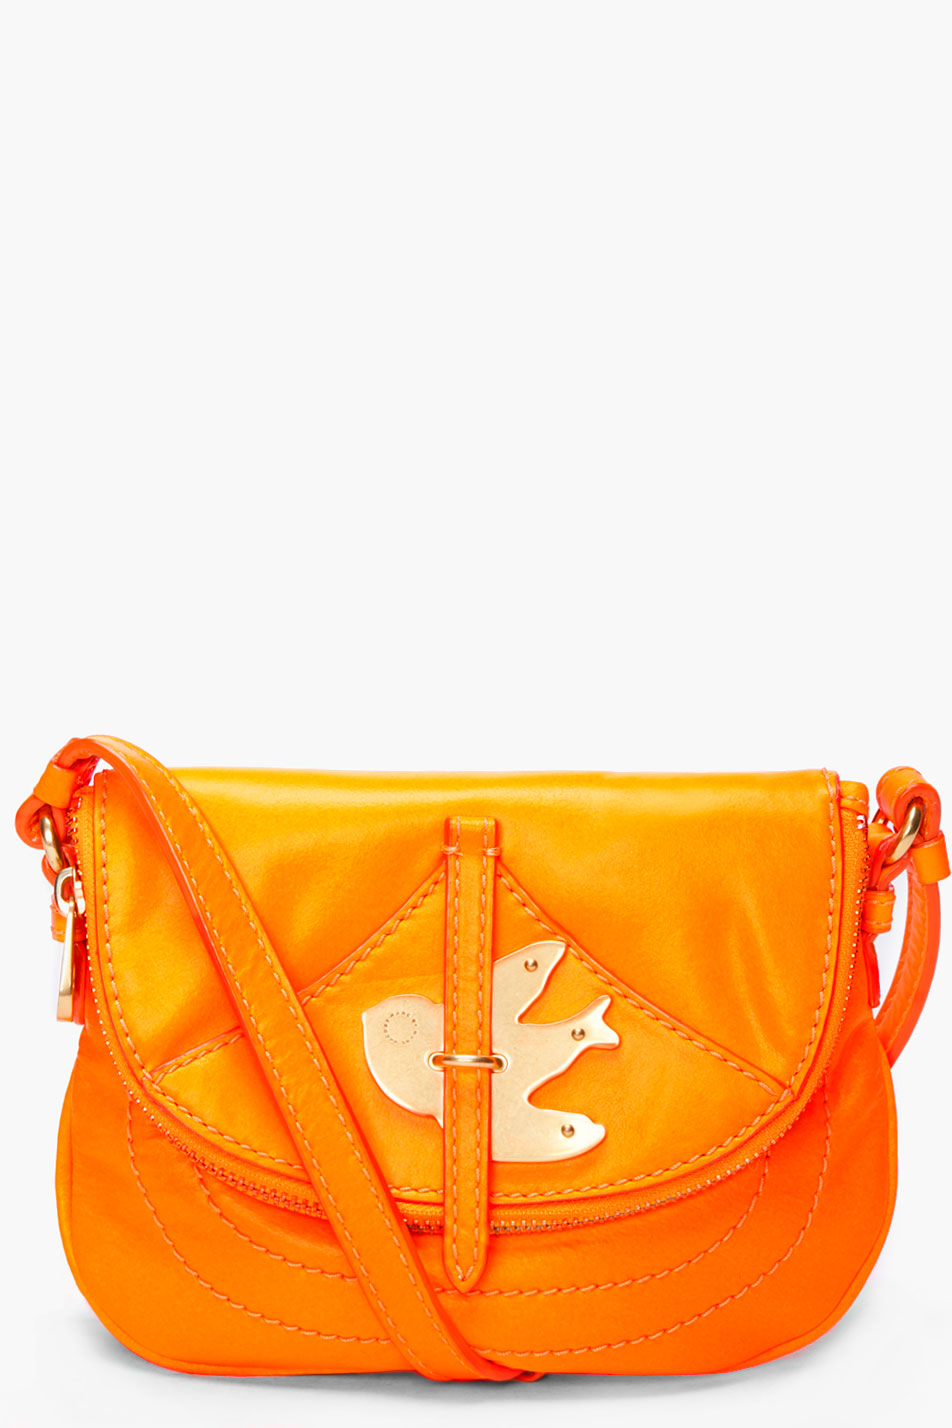 Lyst - Marc By Marc Jacobs Neon Orange Pouch Shoulder Bag in Orange